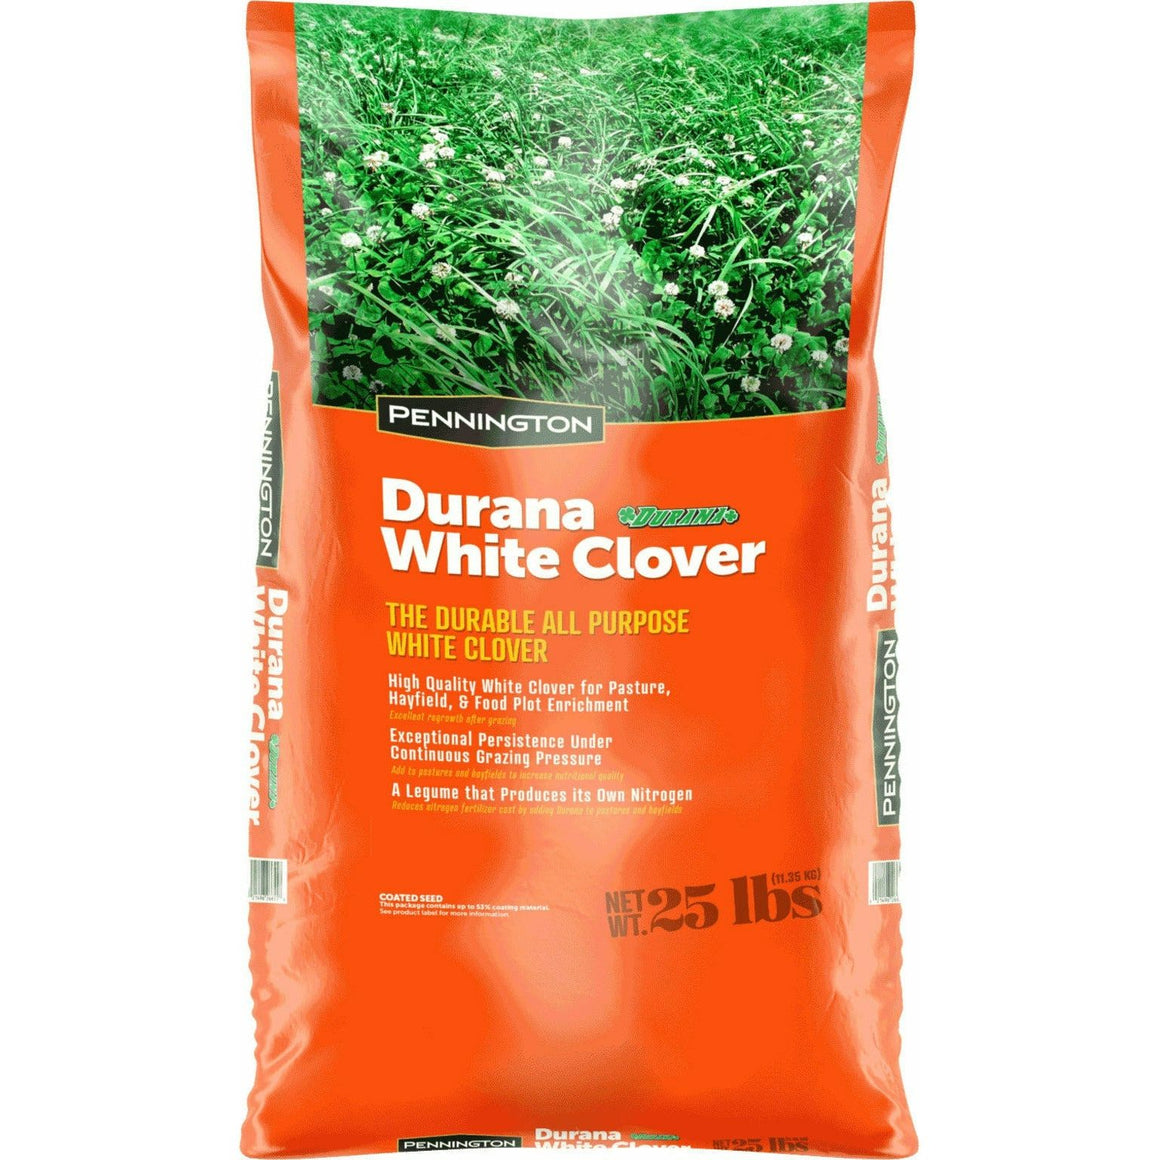  Durana White Clover Seed